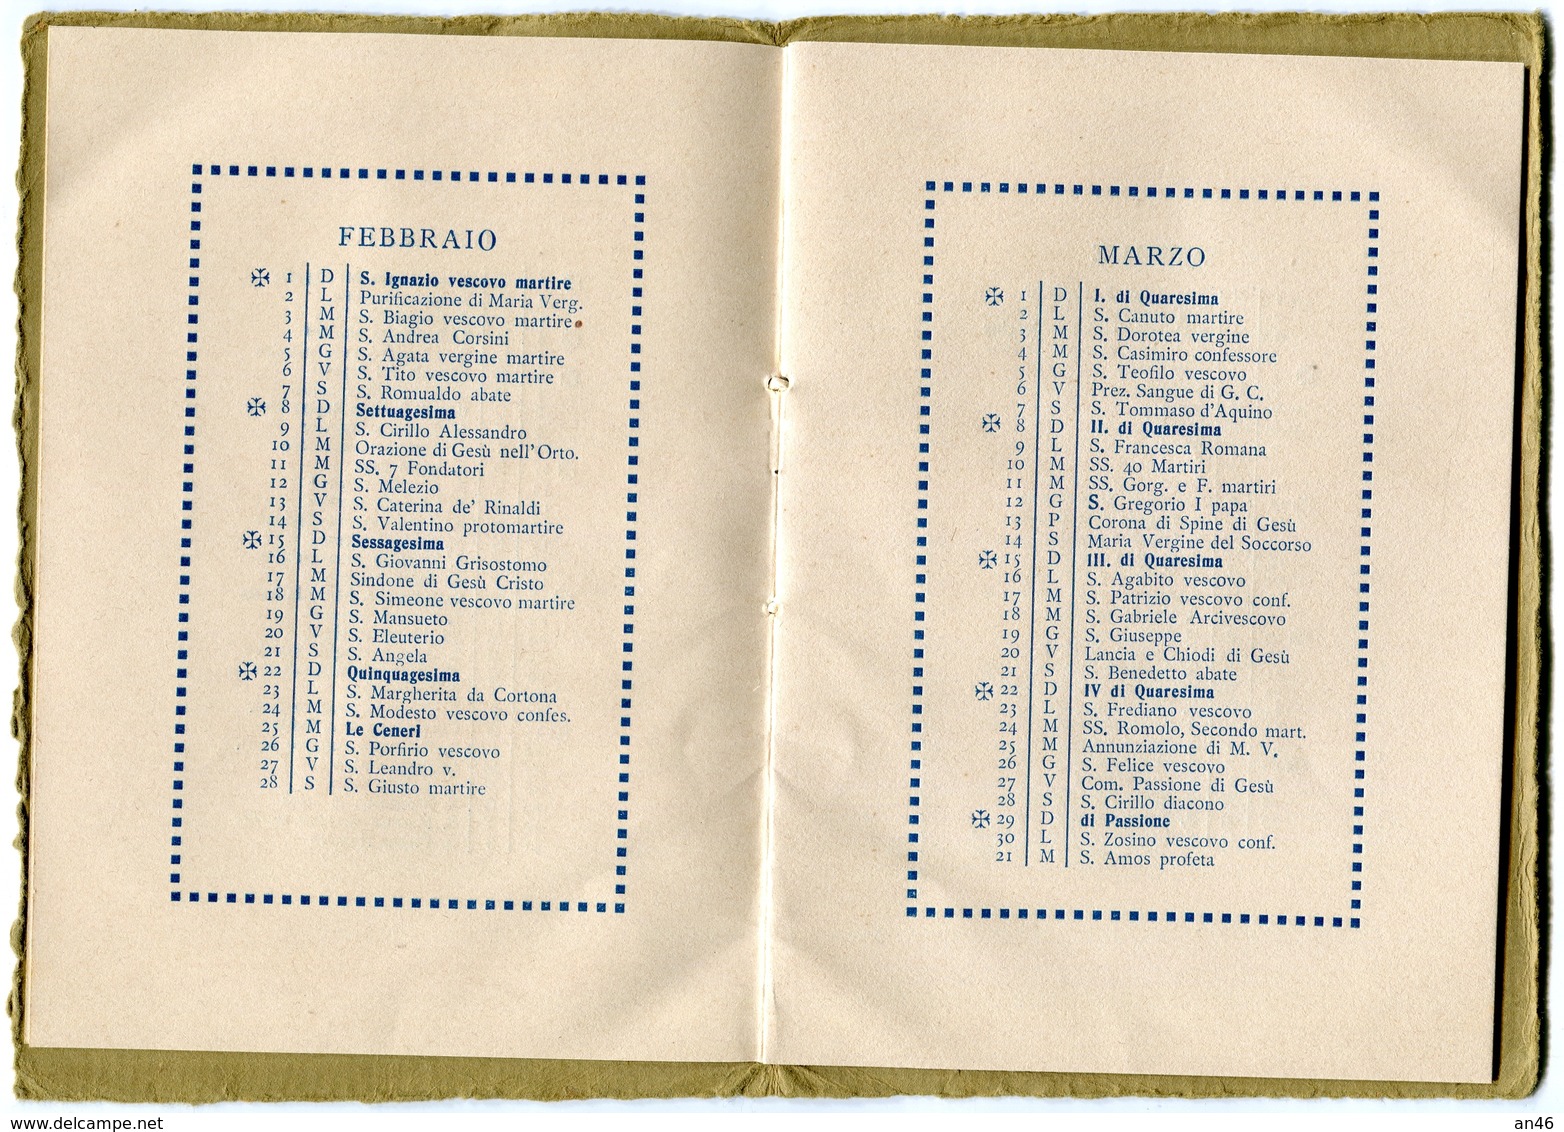 Calendario-Calendarietto-Calendrier-Kalender-Calendar-"Regia Accademia Navale 1914" Integra E Originale 100% - Formato Grande : 1901-20